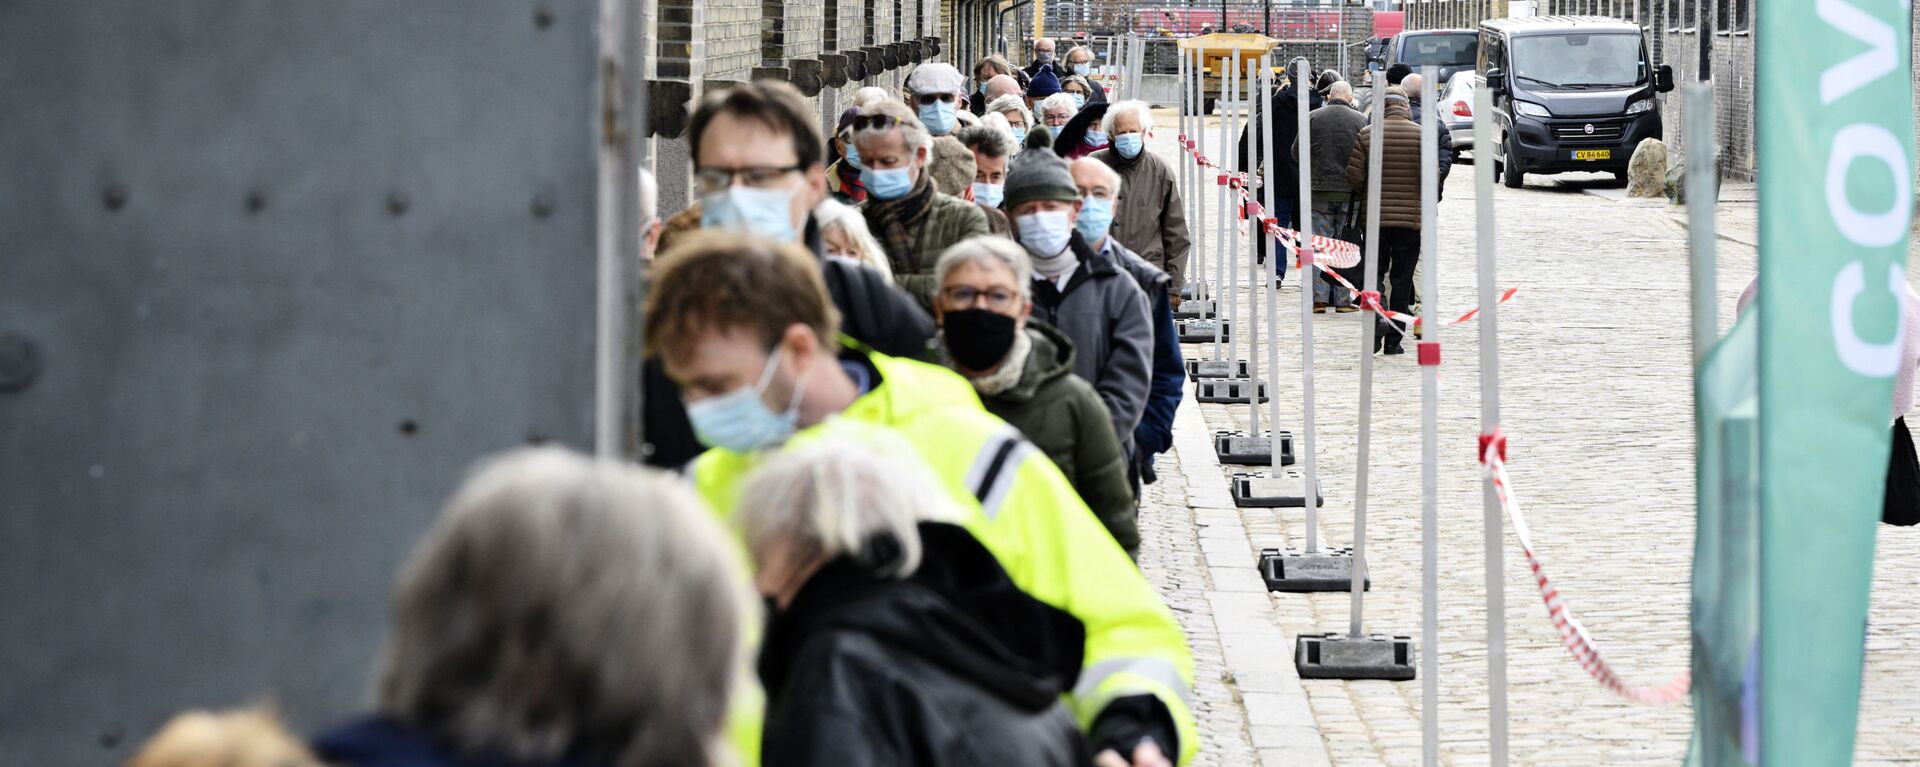 People queue outside the vaccination center in Oksnehallen in Copenhagen, Denmark, on April 12, 2021, during the ongoing coronavirus (Covid-19) pandemic.  - Sputnik International, 1920, 09.08.2021